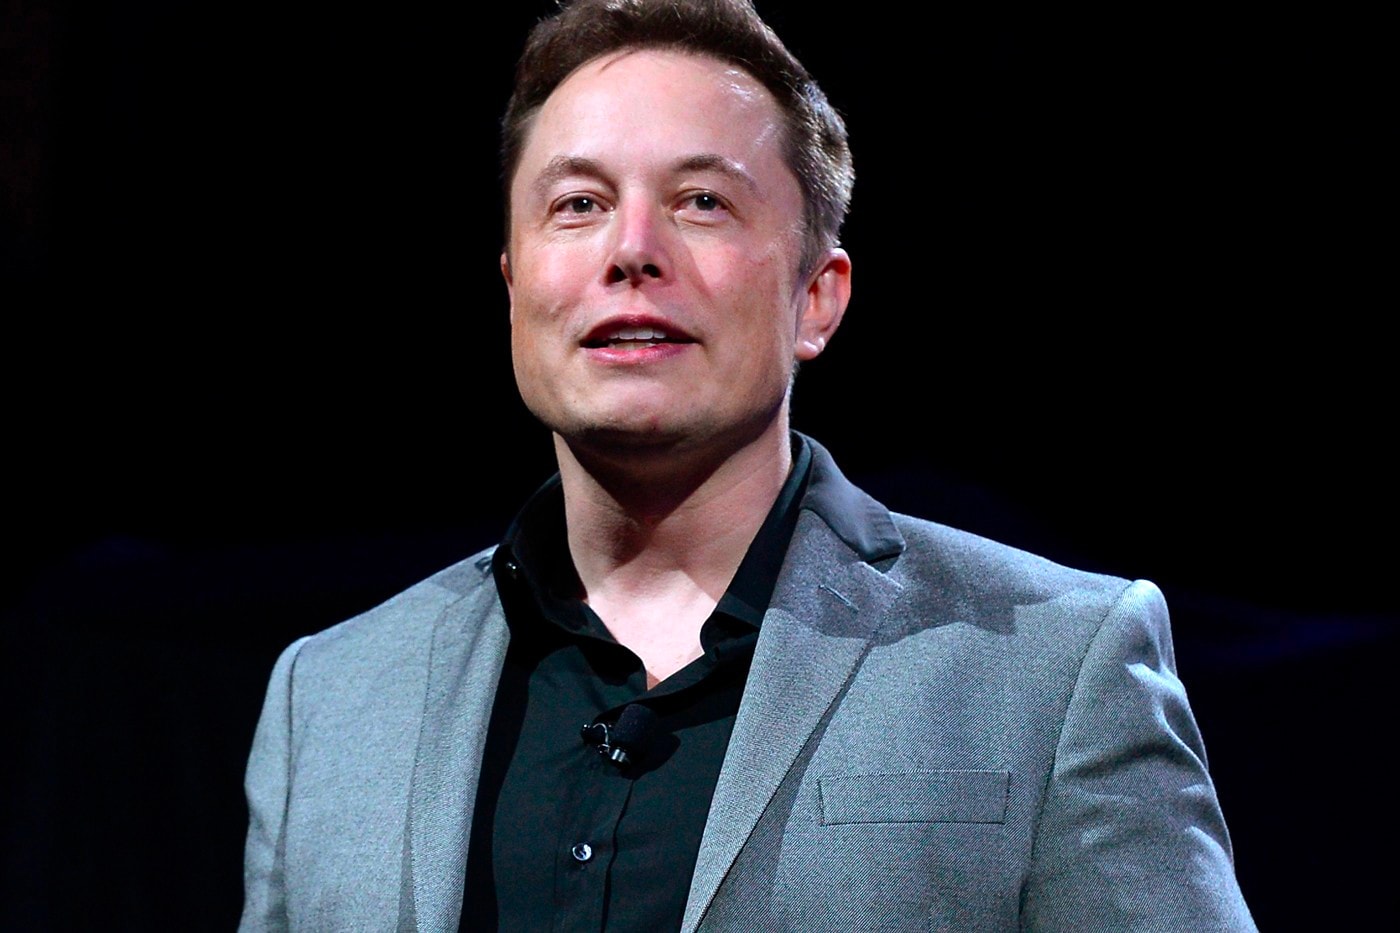 Elon Musk Richest Person World jeff bezos Tesla SpaceX blue origin llc cybertruck stock price share automaker vehicles wealth money